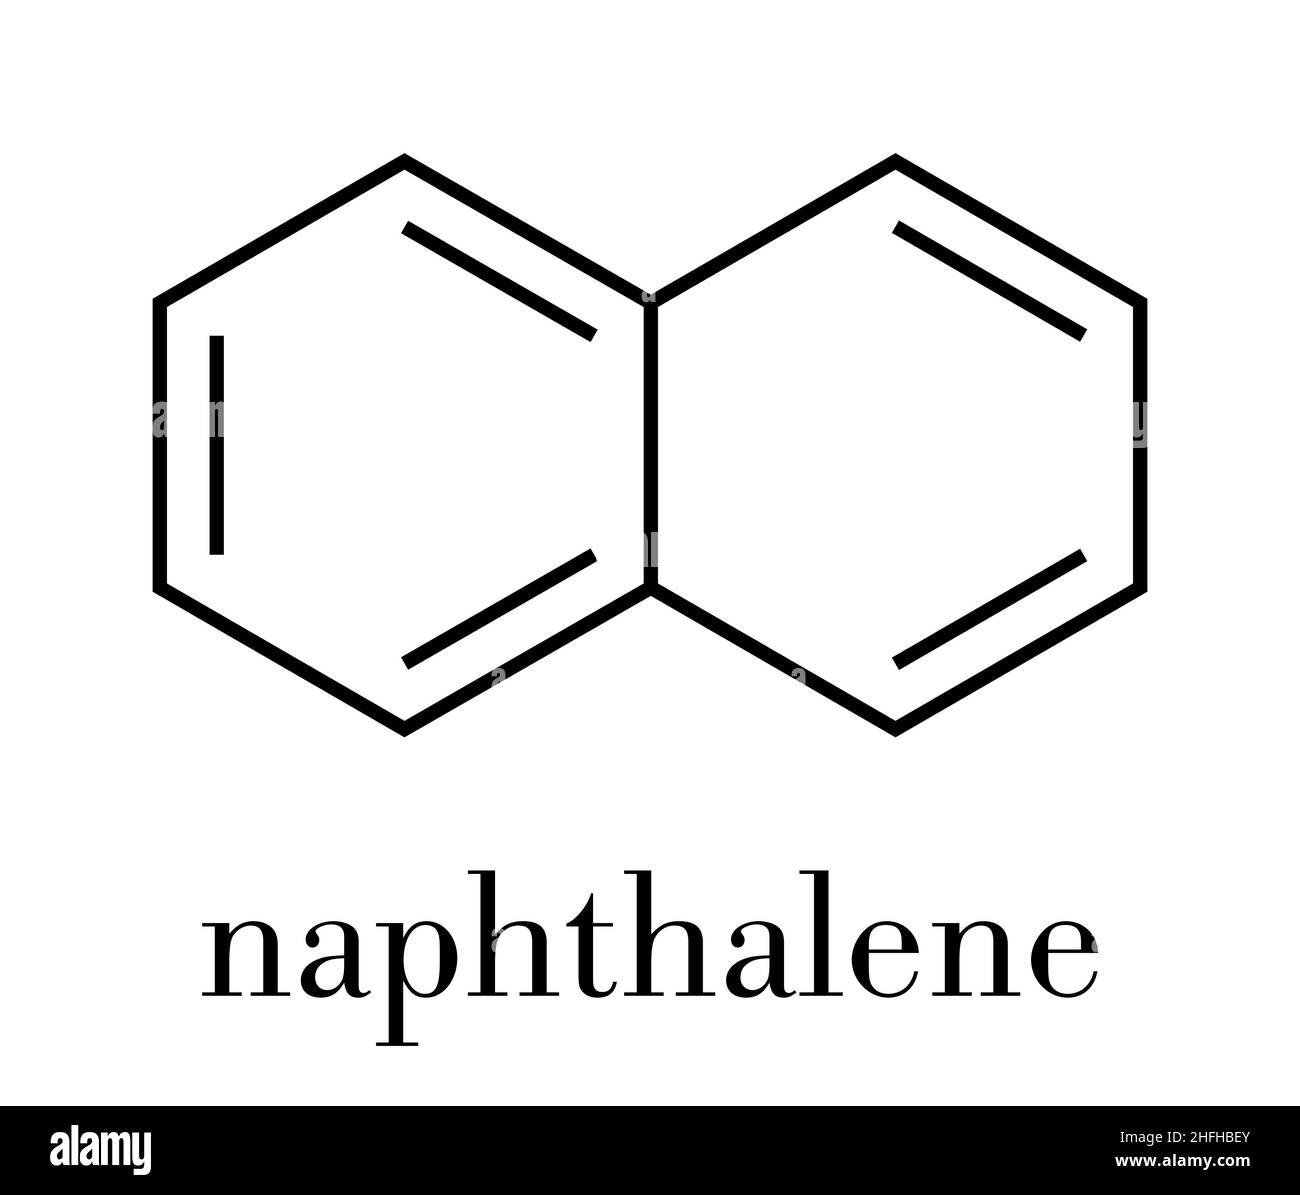 Boule De Naphtaline De Naphtalène Photo stock - Image du cristallin, anti:  138352562